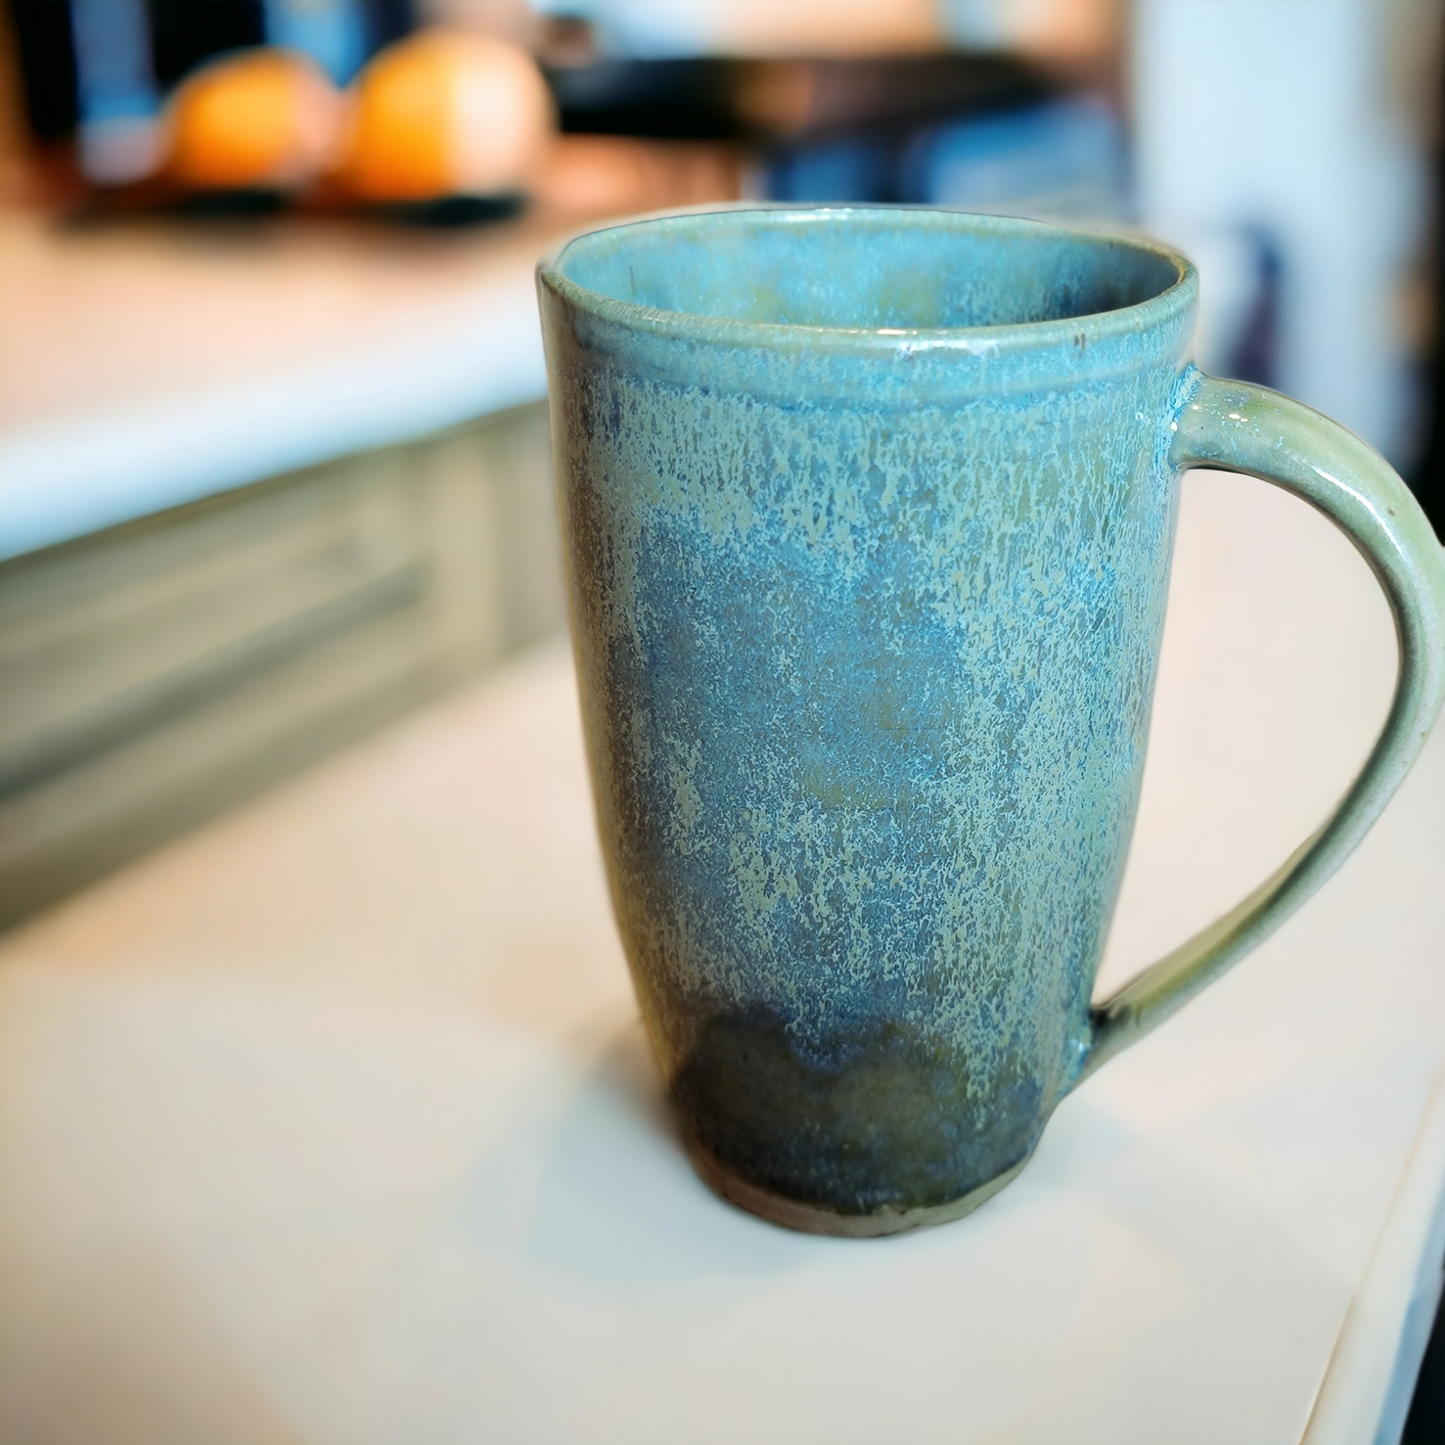 Turquoise and Green Mug - #48 - SOLD